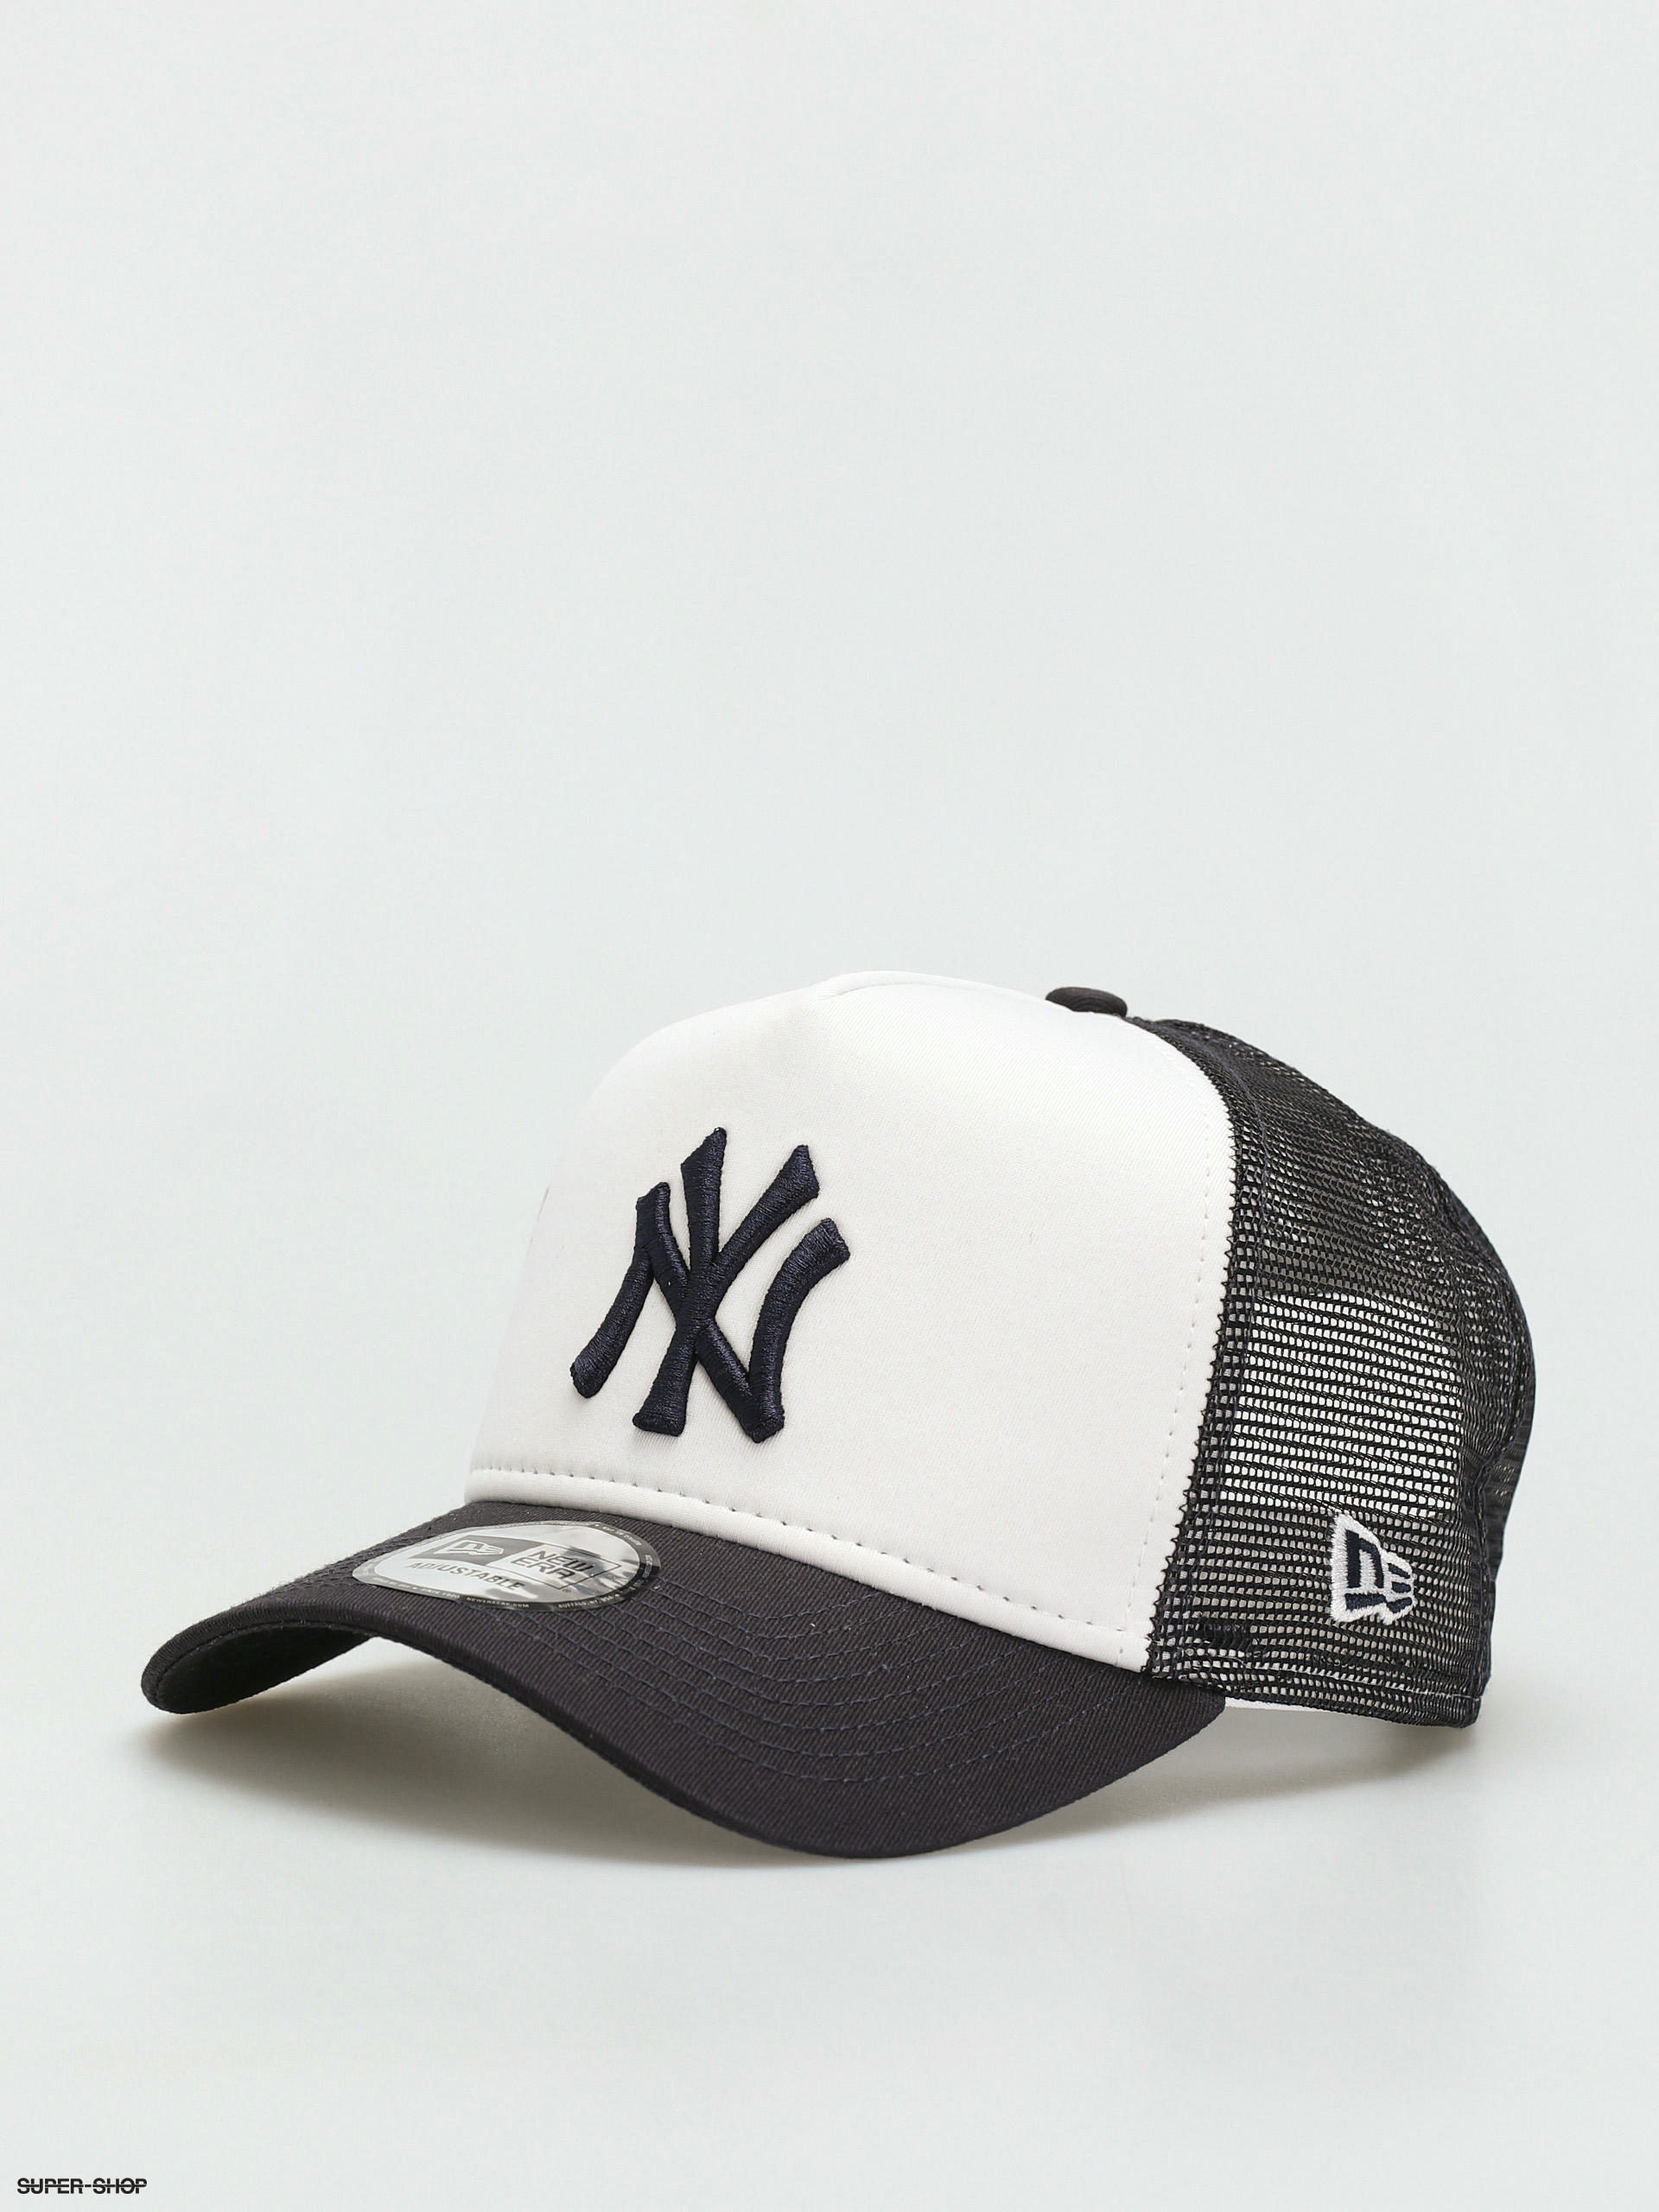 NEW ERA 940 Af trucker MLB team colour block NY cap Black White